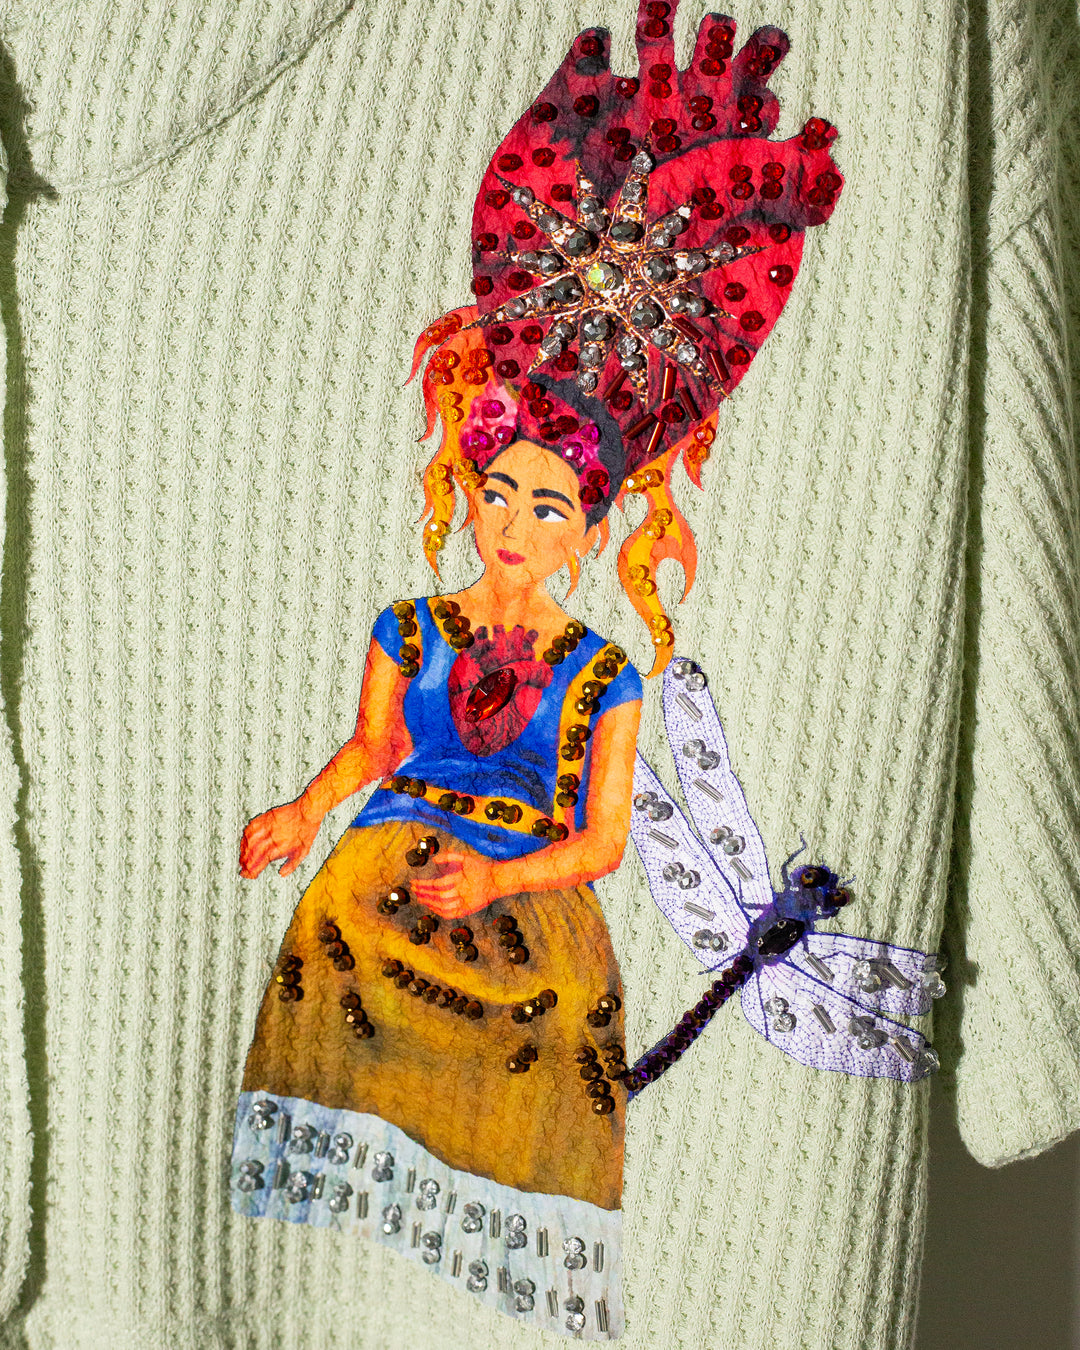 Knitted tee Fridas bordadas